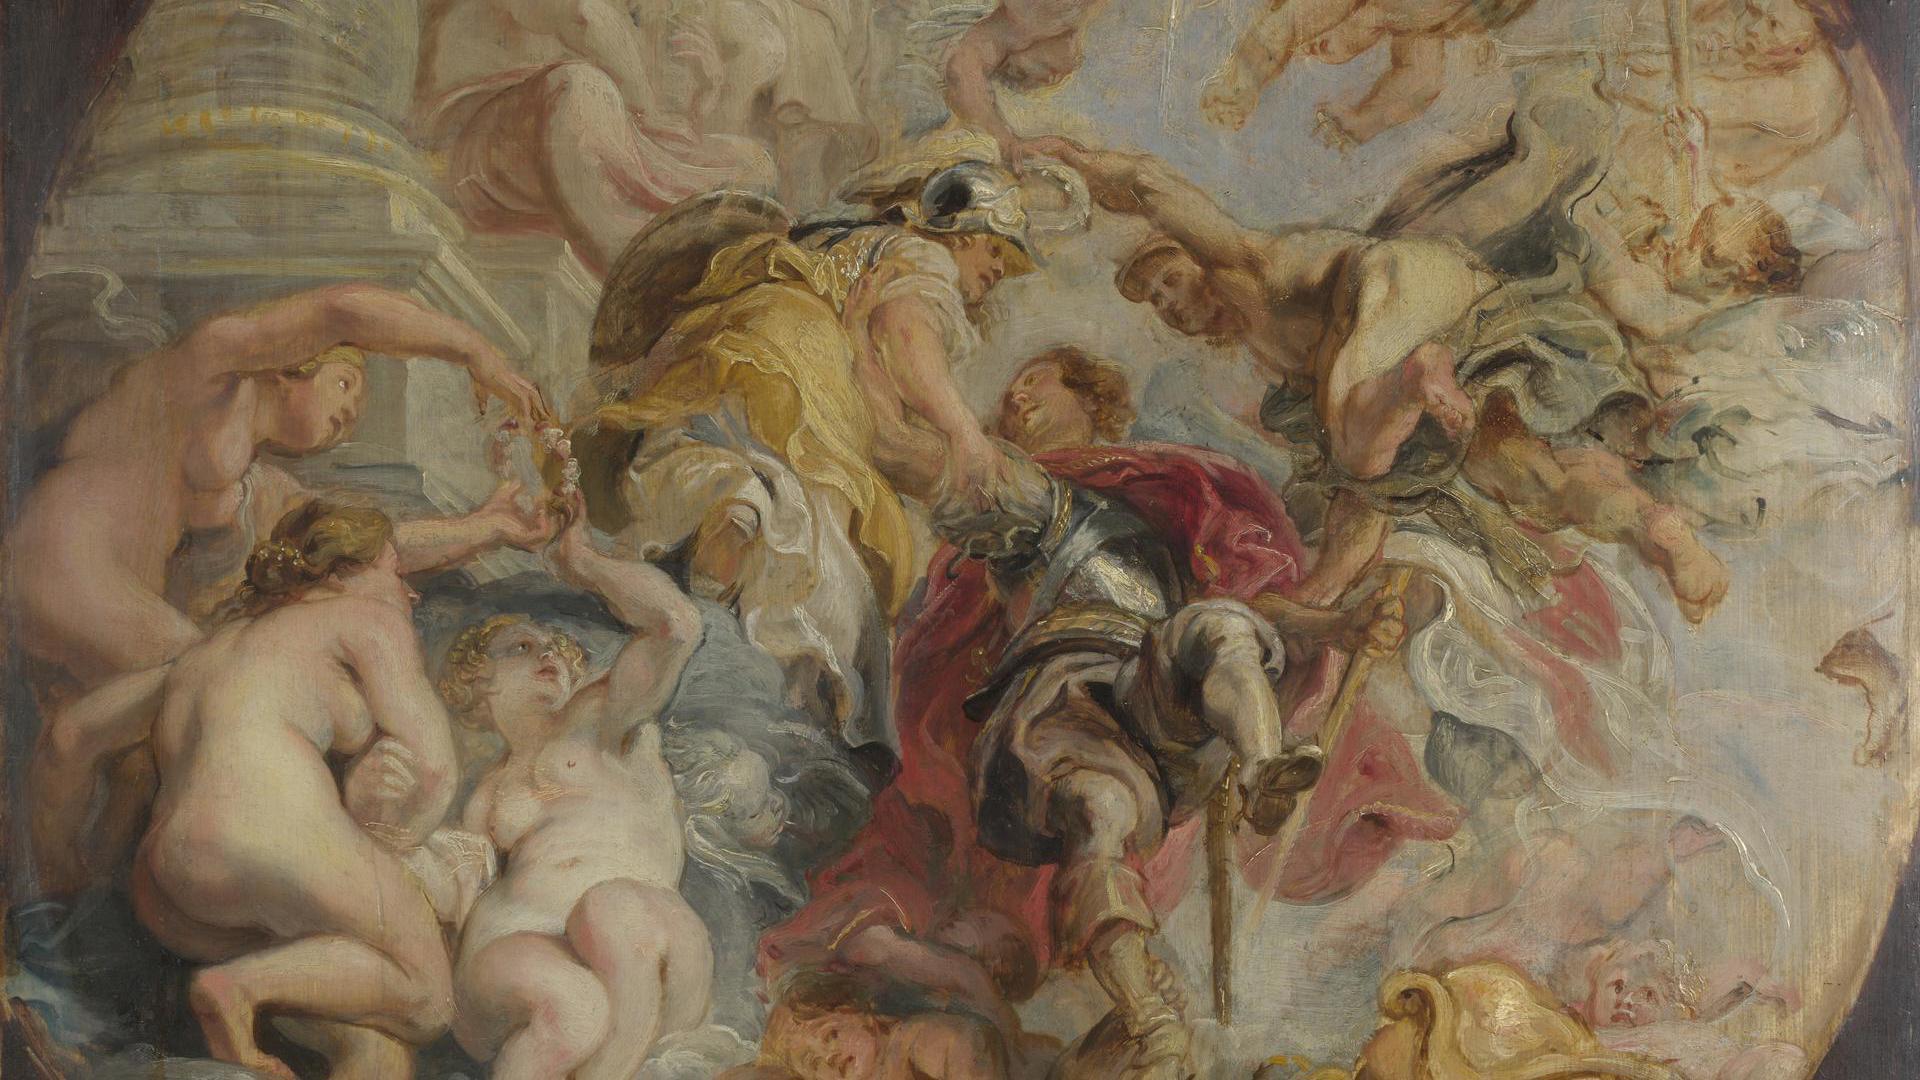 The Apotheosis of the Duke of Buckingham by Peter Paul Rubens